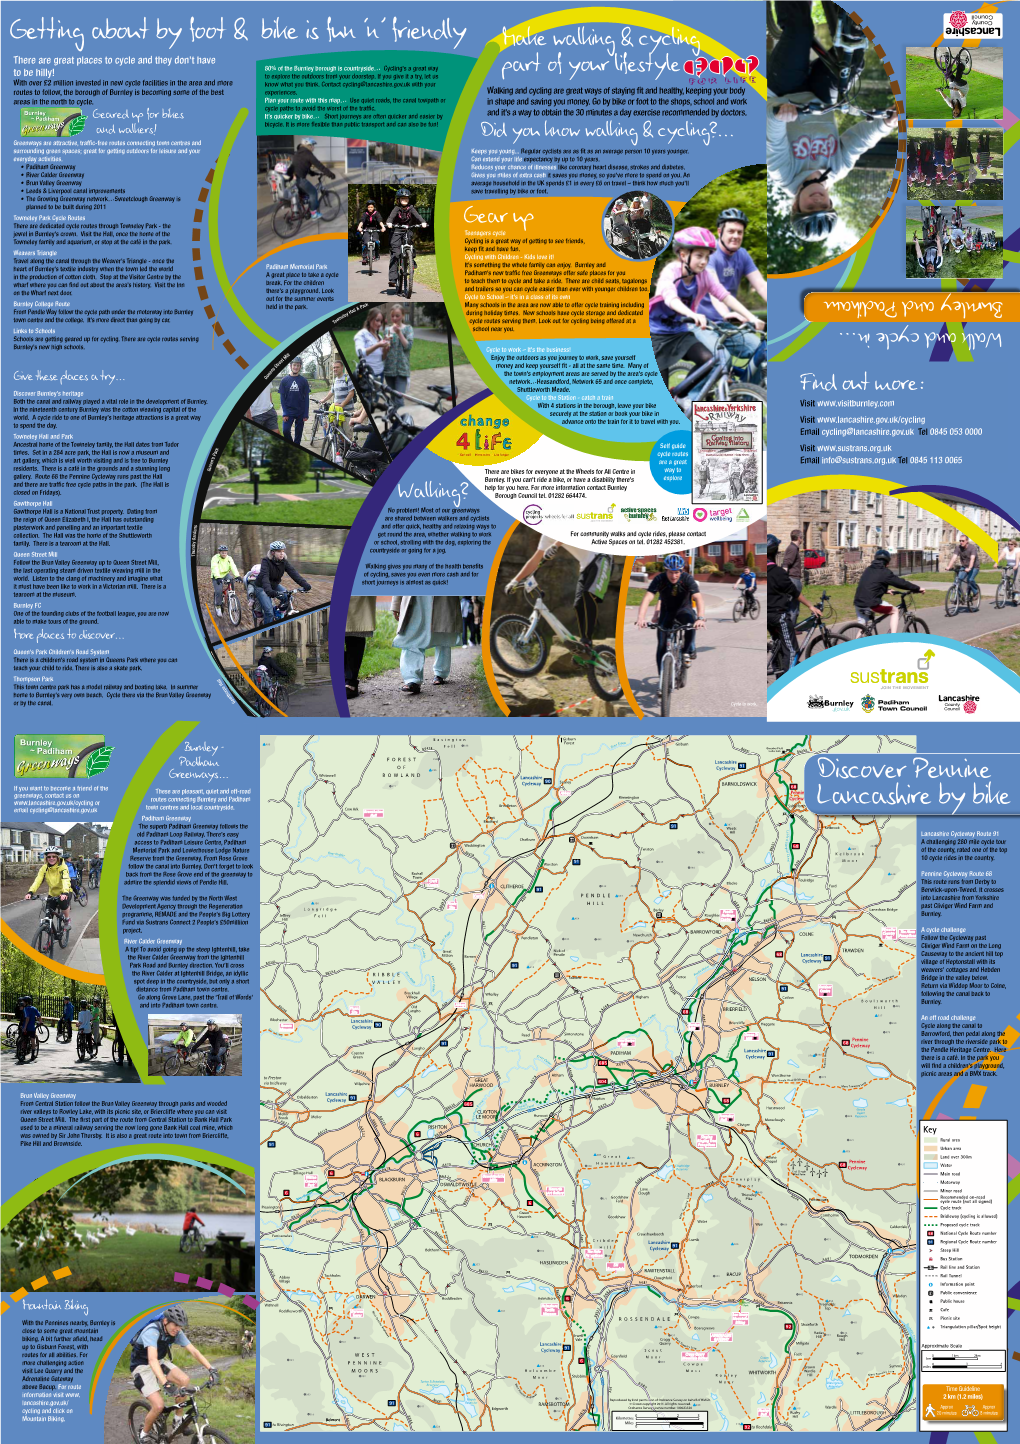 Discover Pennine Lancashire by Bike